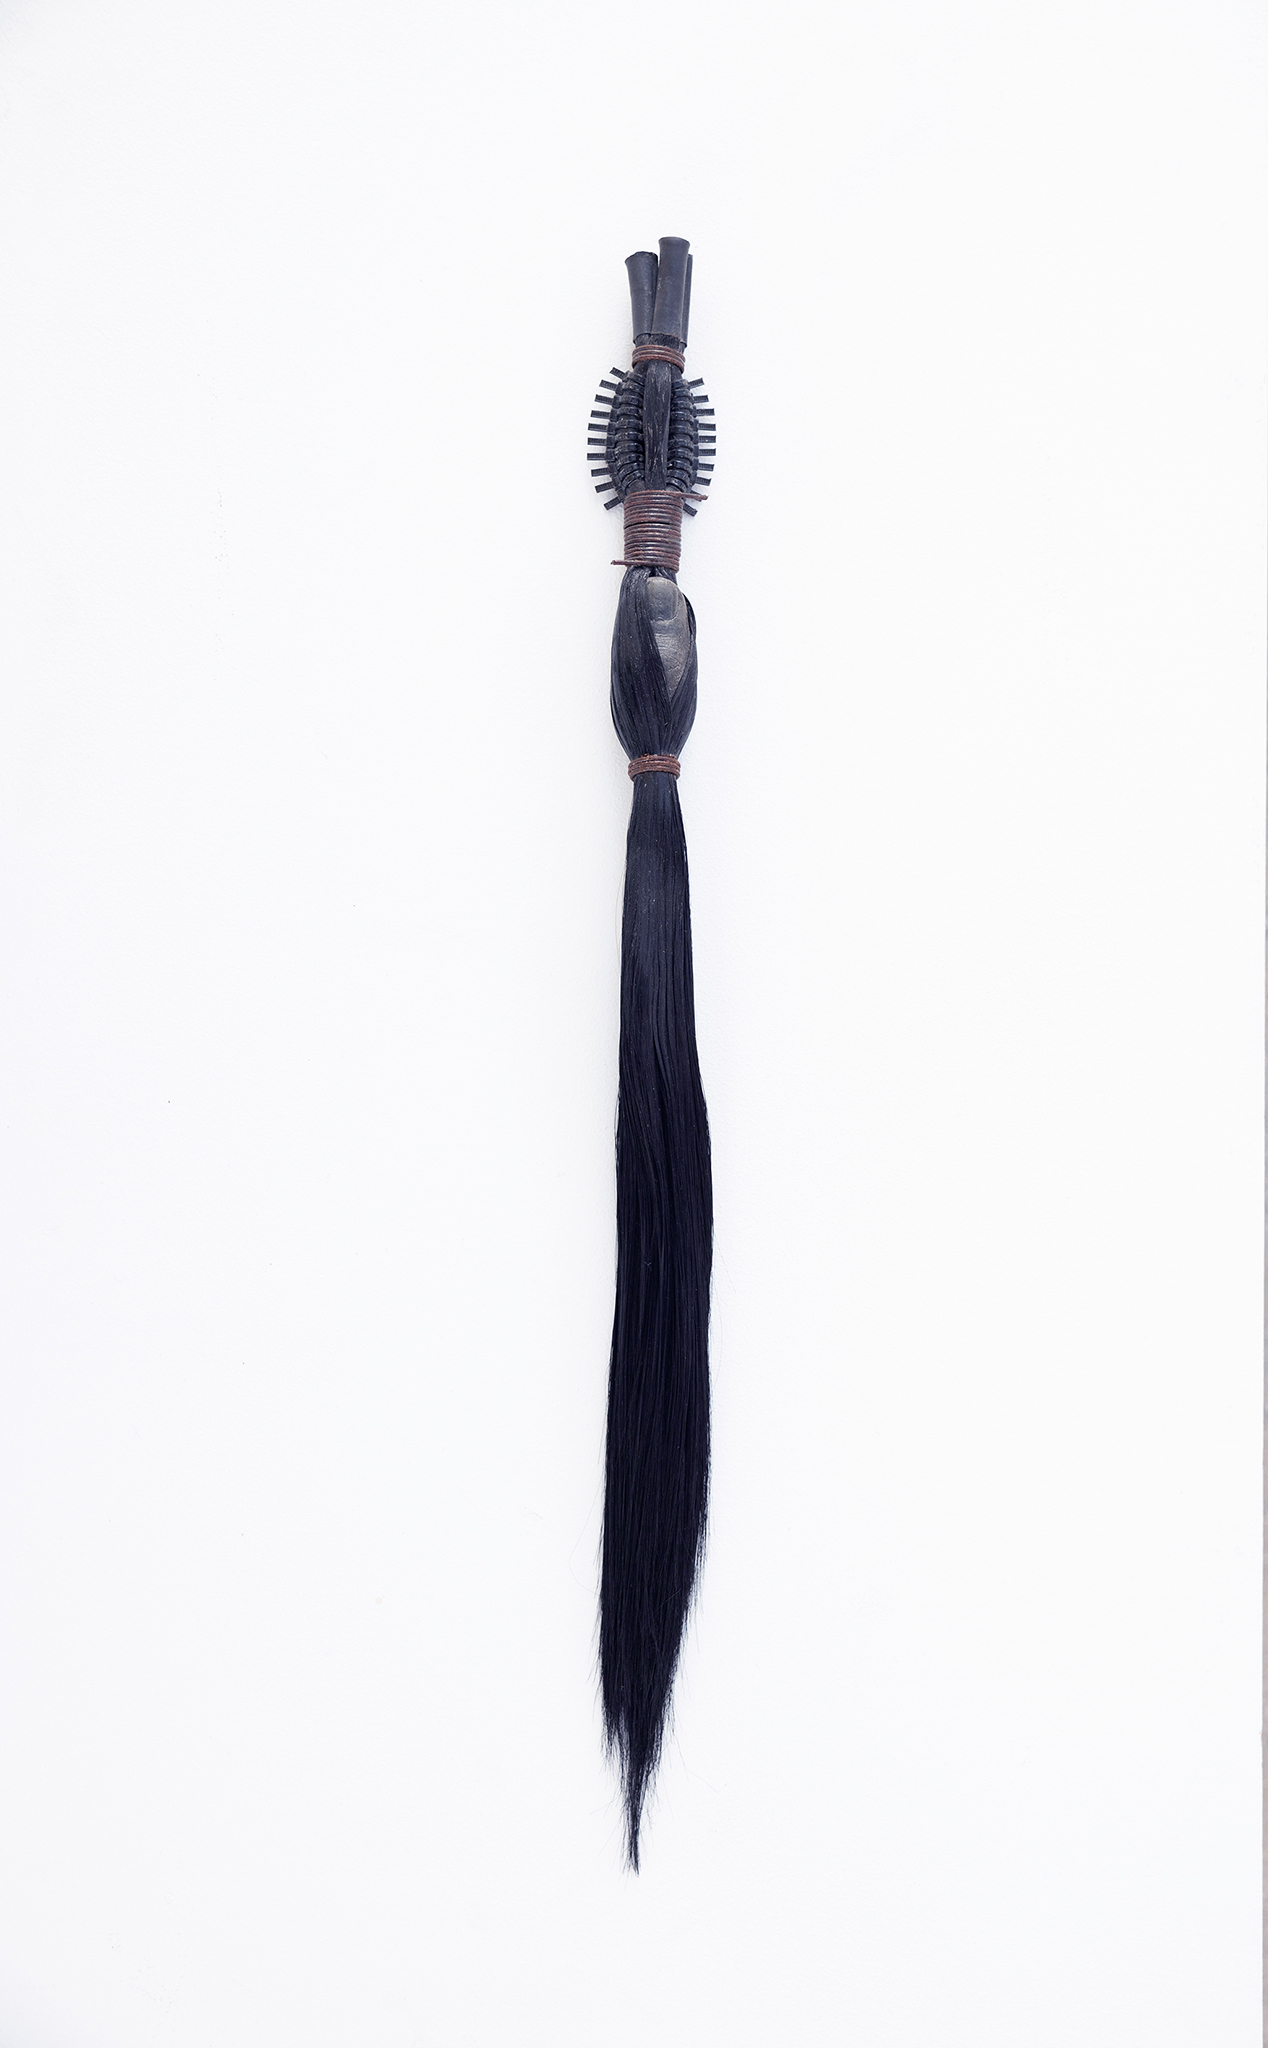 Taka Kono / godsend (1) / Hair, cement, steel wire, binding tape / 55Ã—5cm / 2021